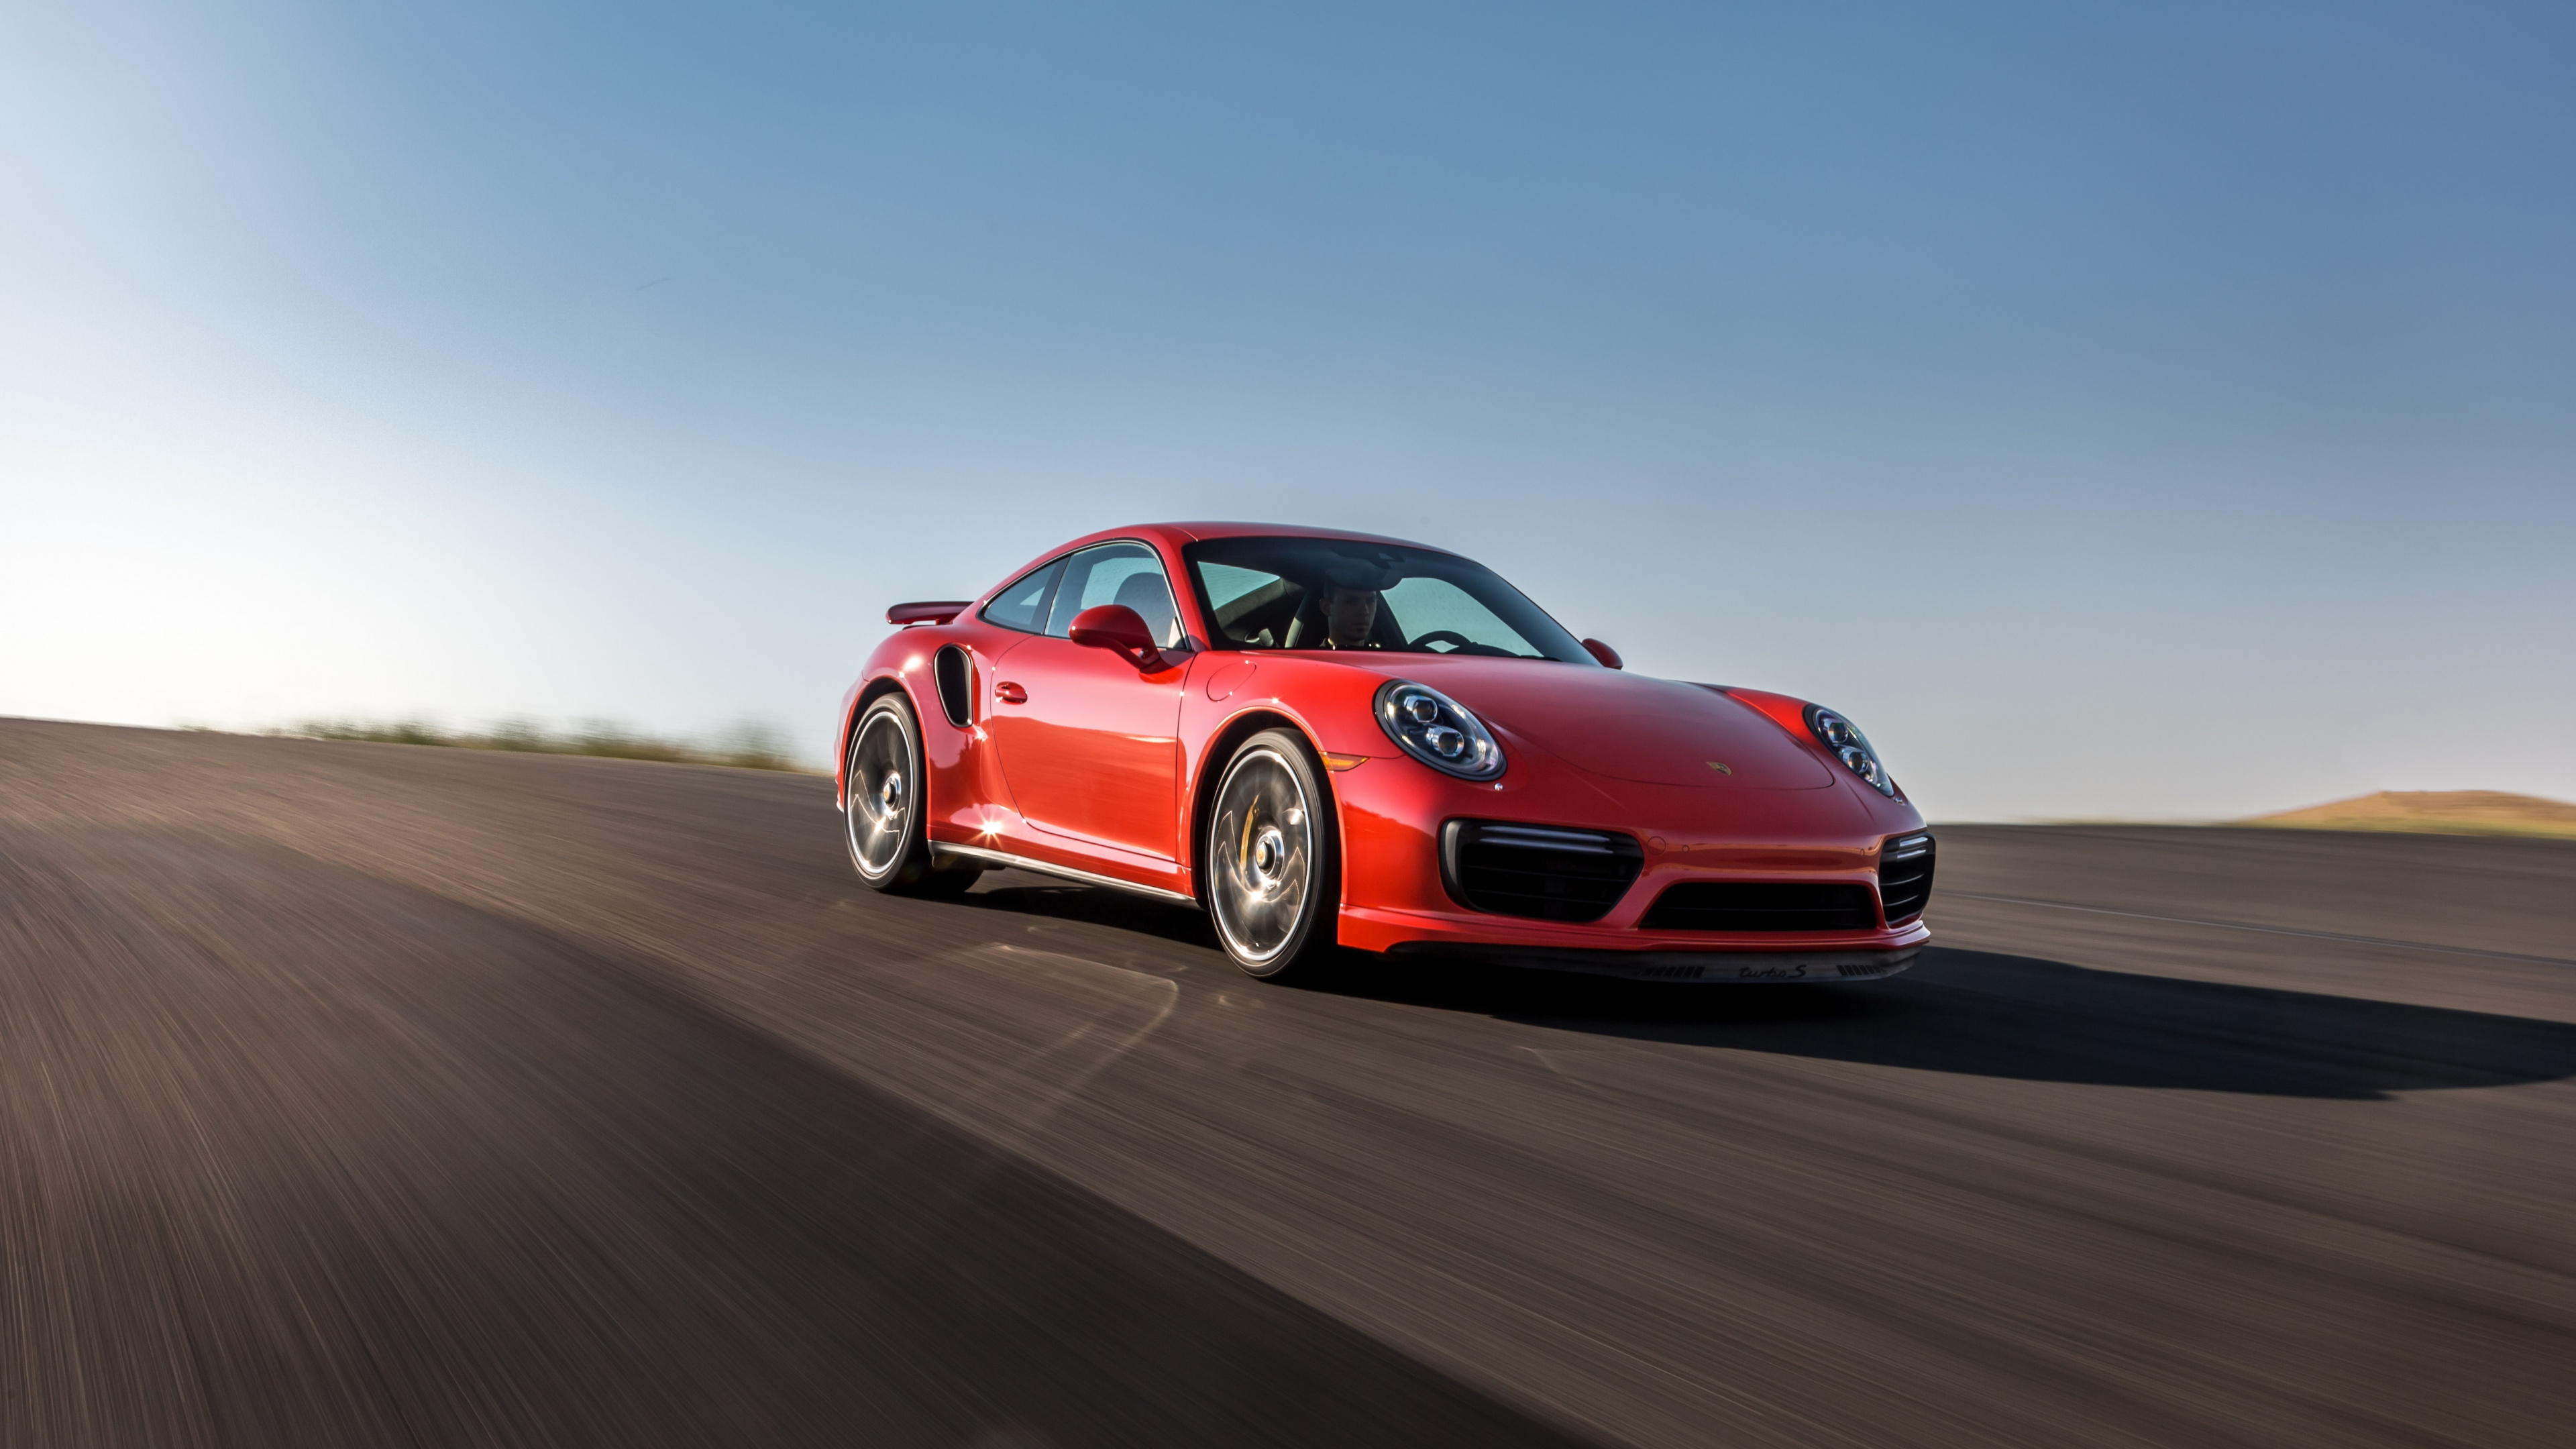 Red Porsche 911 on Road During Daytime. Wallpaper in 3840x2160 Resolution